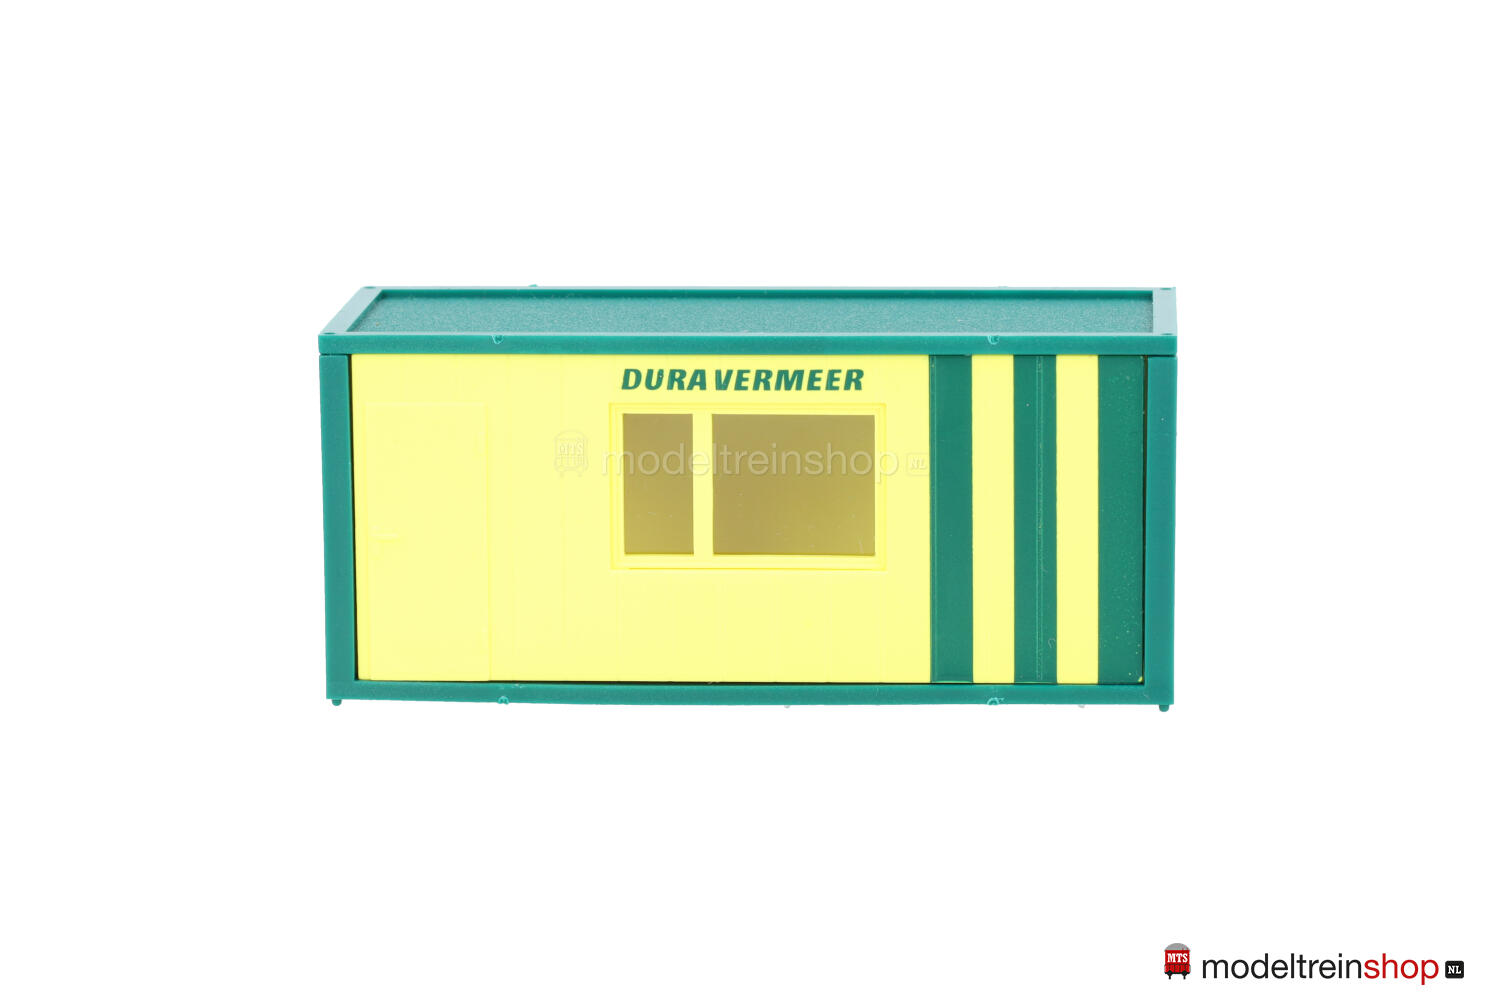 Busch H0 1029-01 Dura Vermeer Container - Modeltreinshop